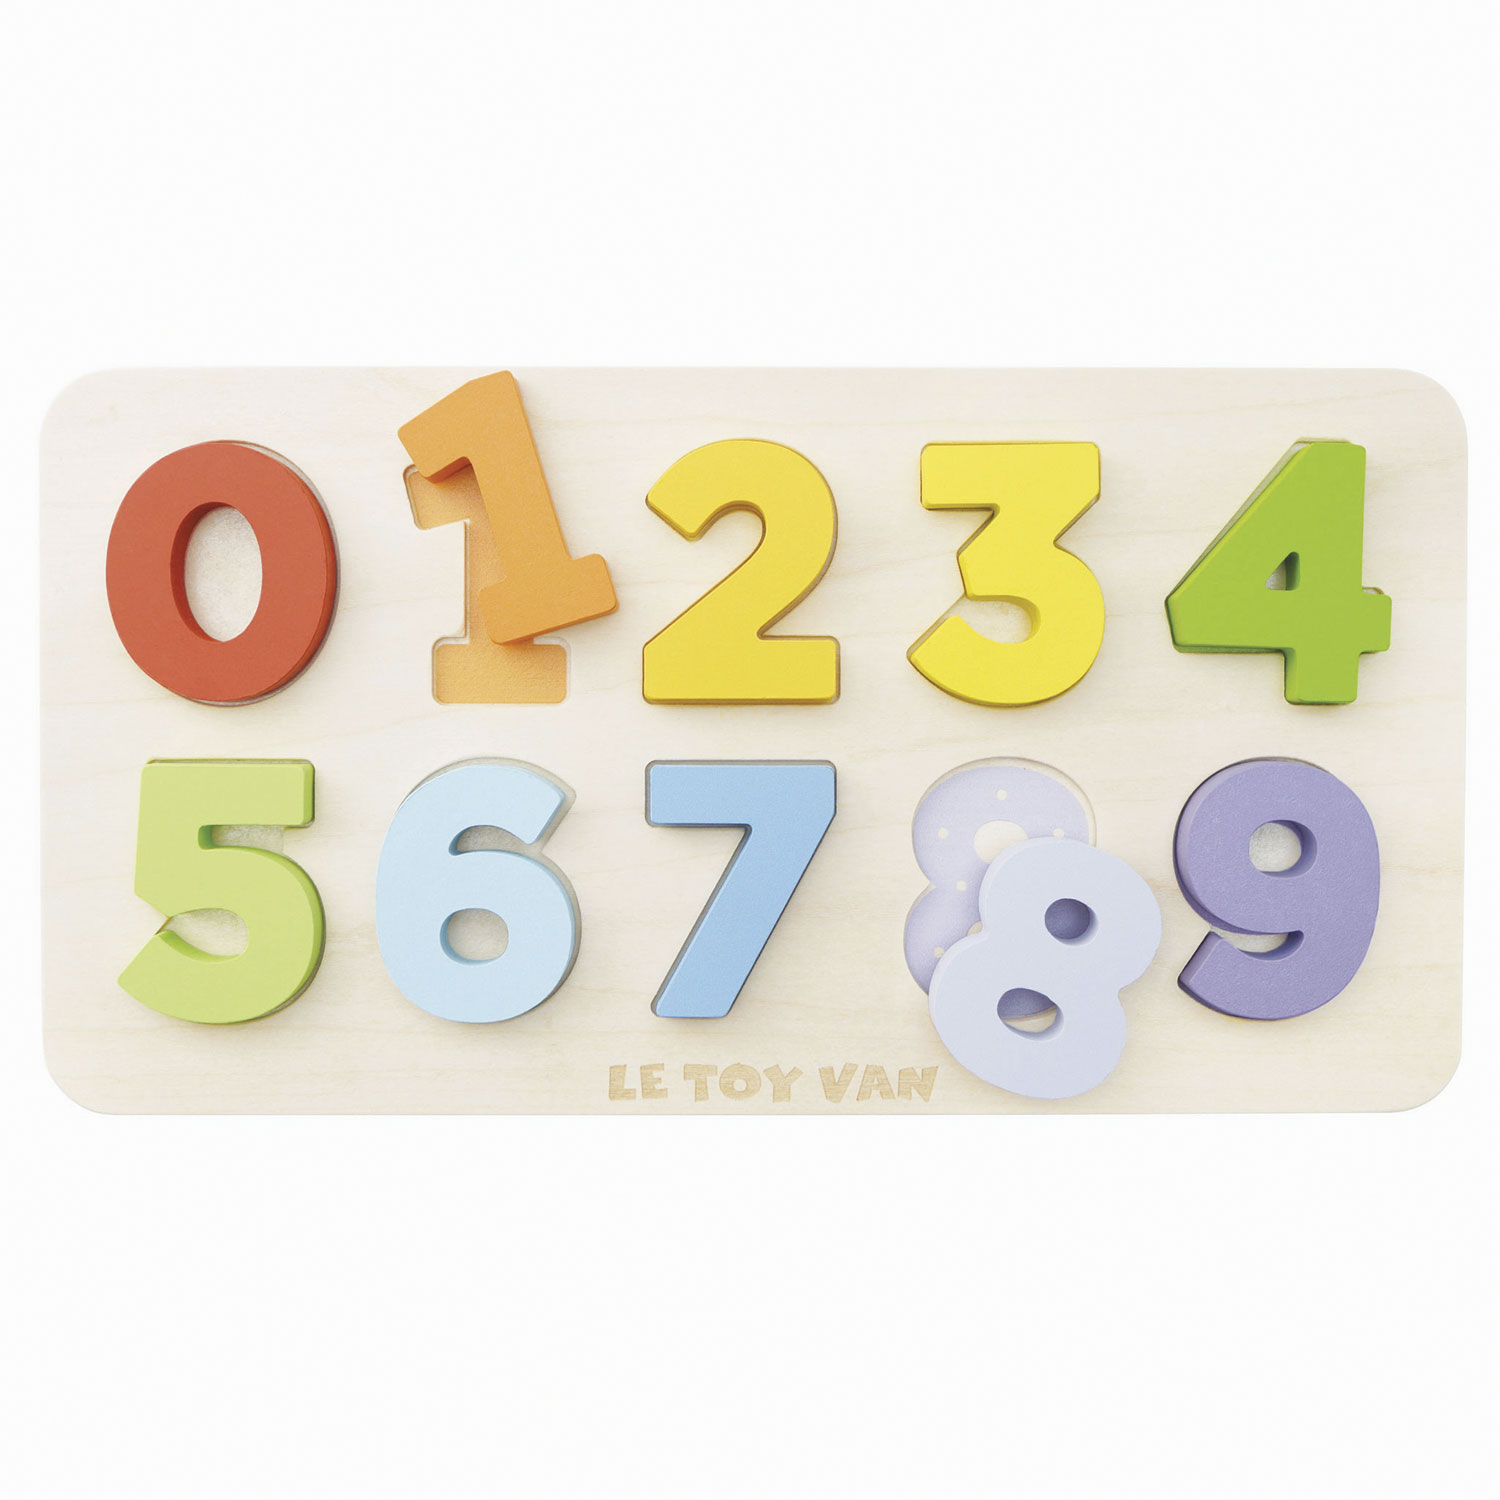 Zahlenpuzzle / Figures Counting Puzzles